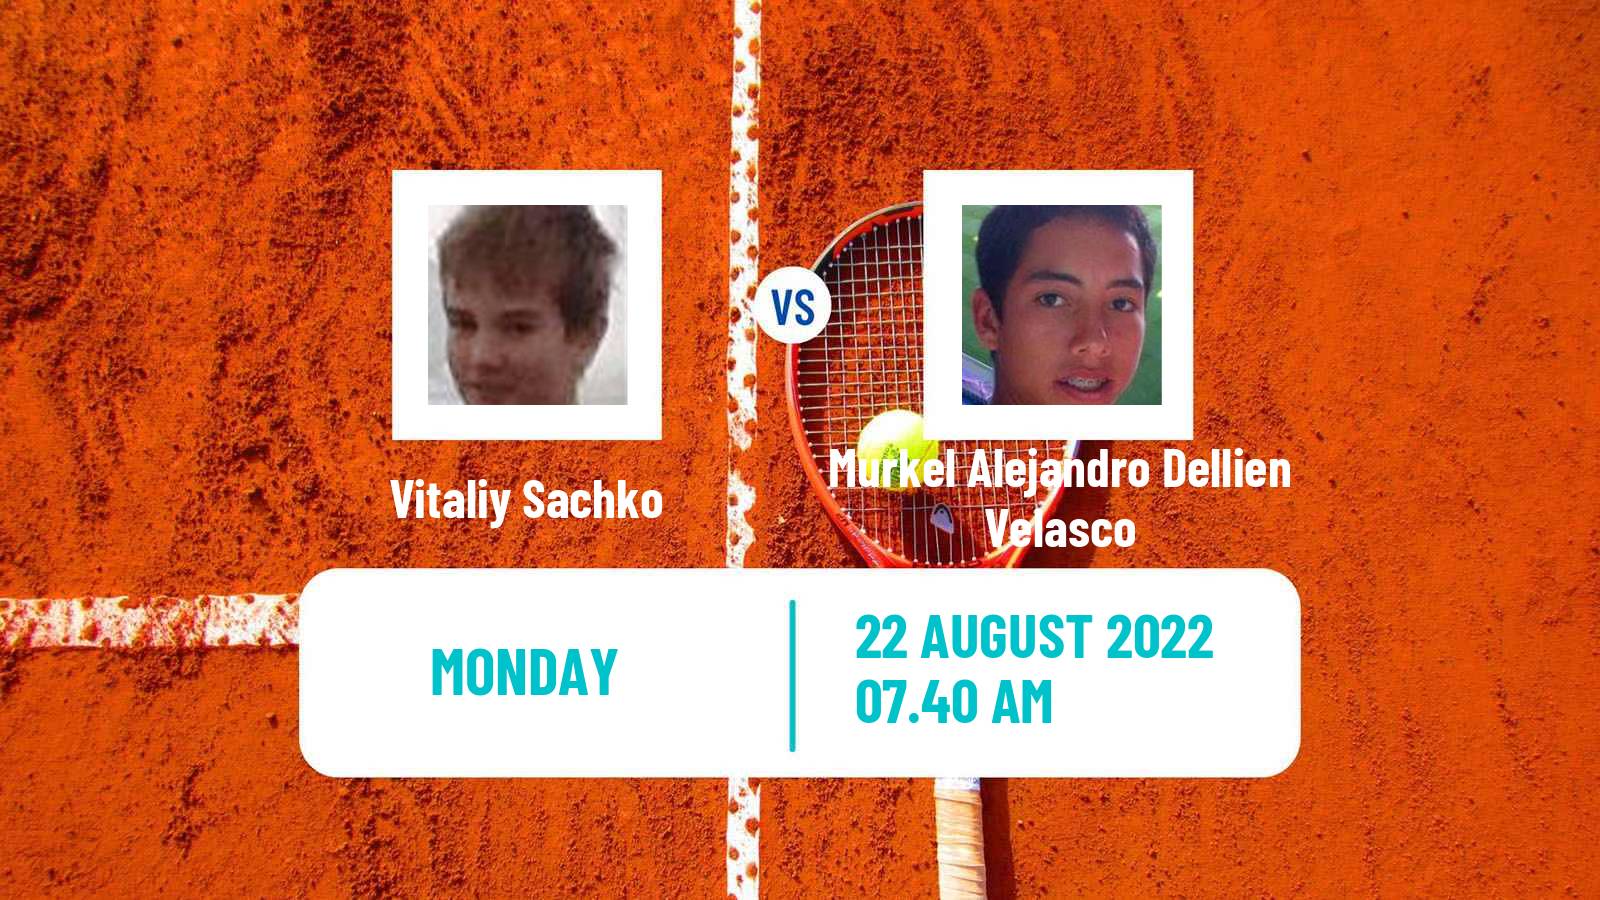 Tennis ATP Challenger Vitaliy Sachko - Murkel Alejandro Dellien Velasco